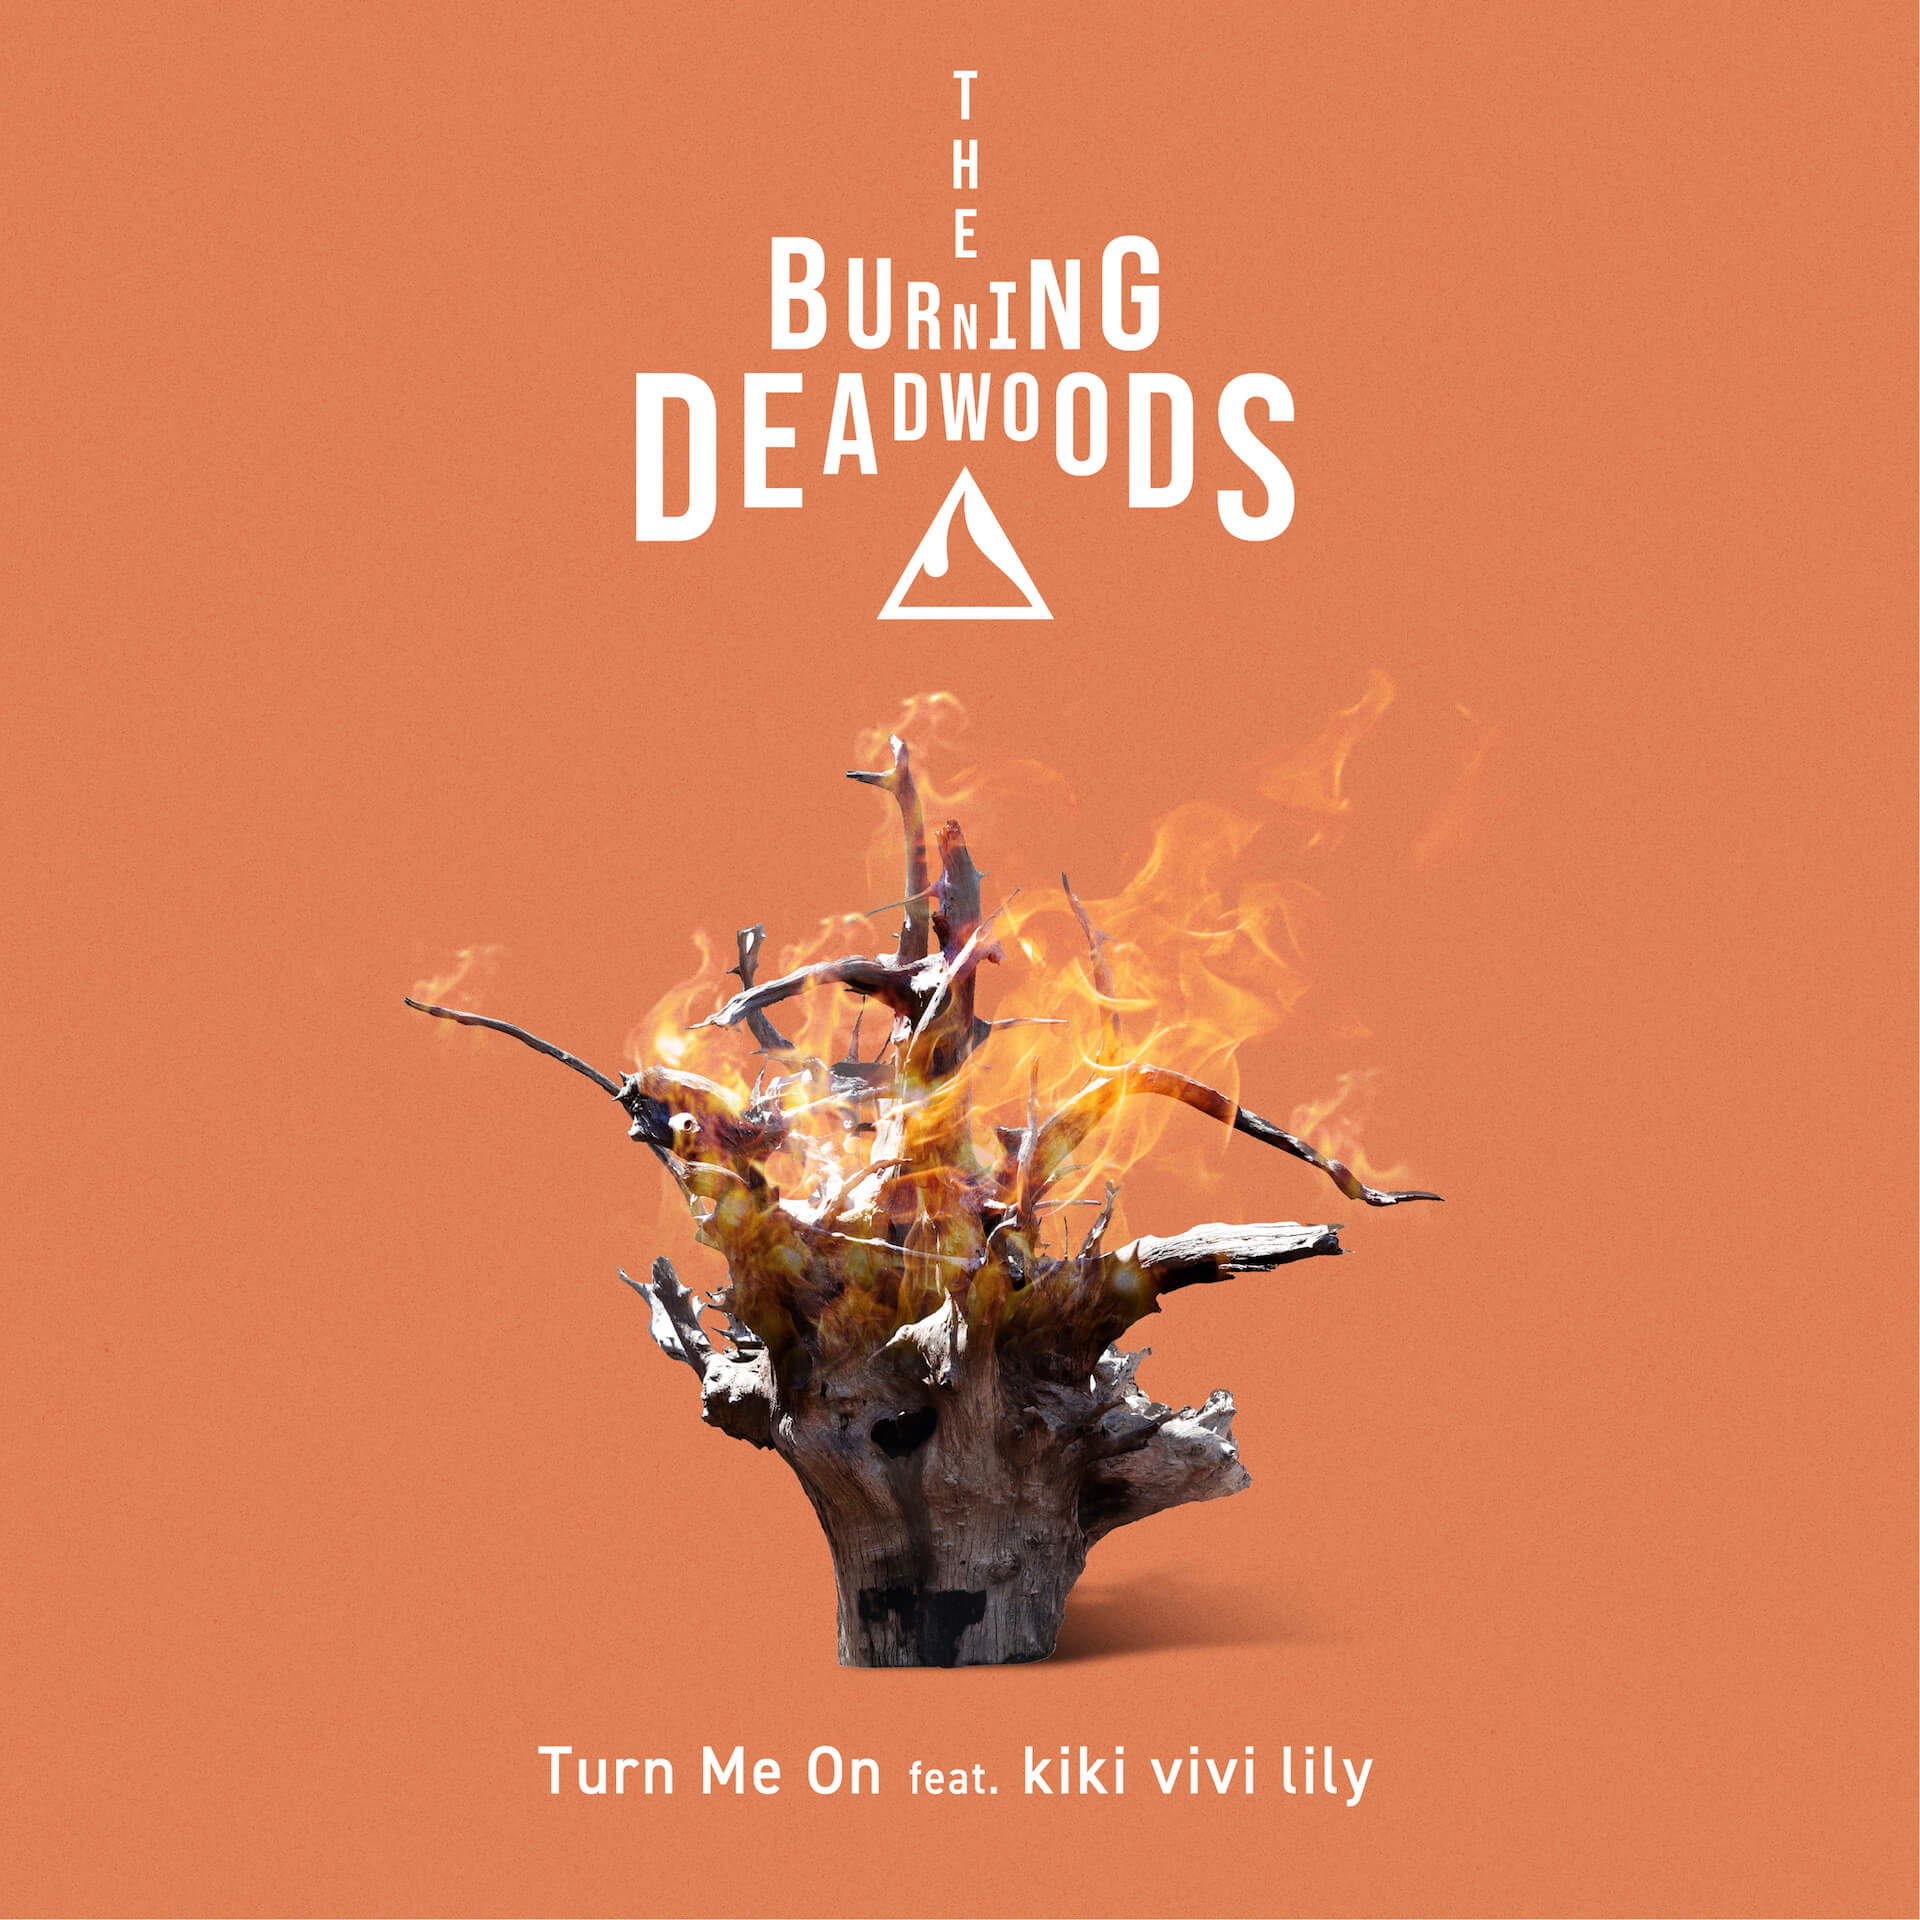 The Burning Deadwoodsのデビューシングル“Turn Me On feat. kiki vivi lily”が本日配信開始！ music210901_deadwoods_2